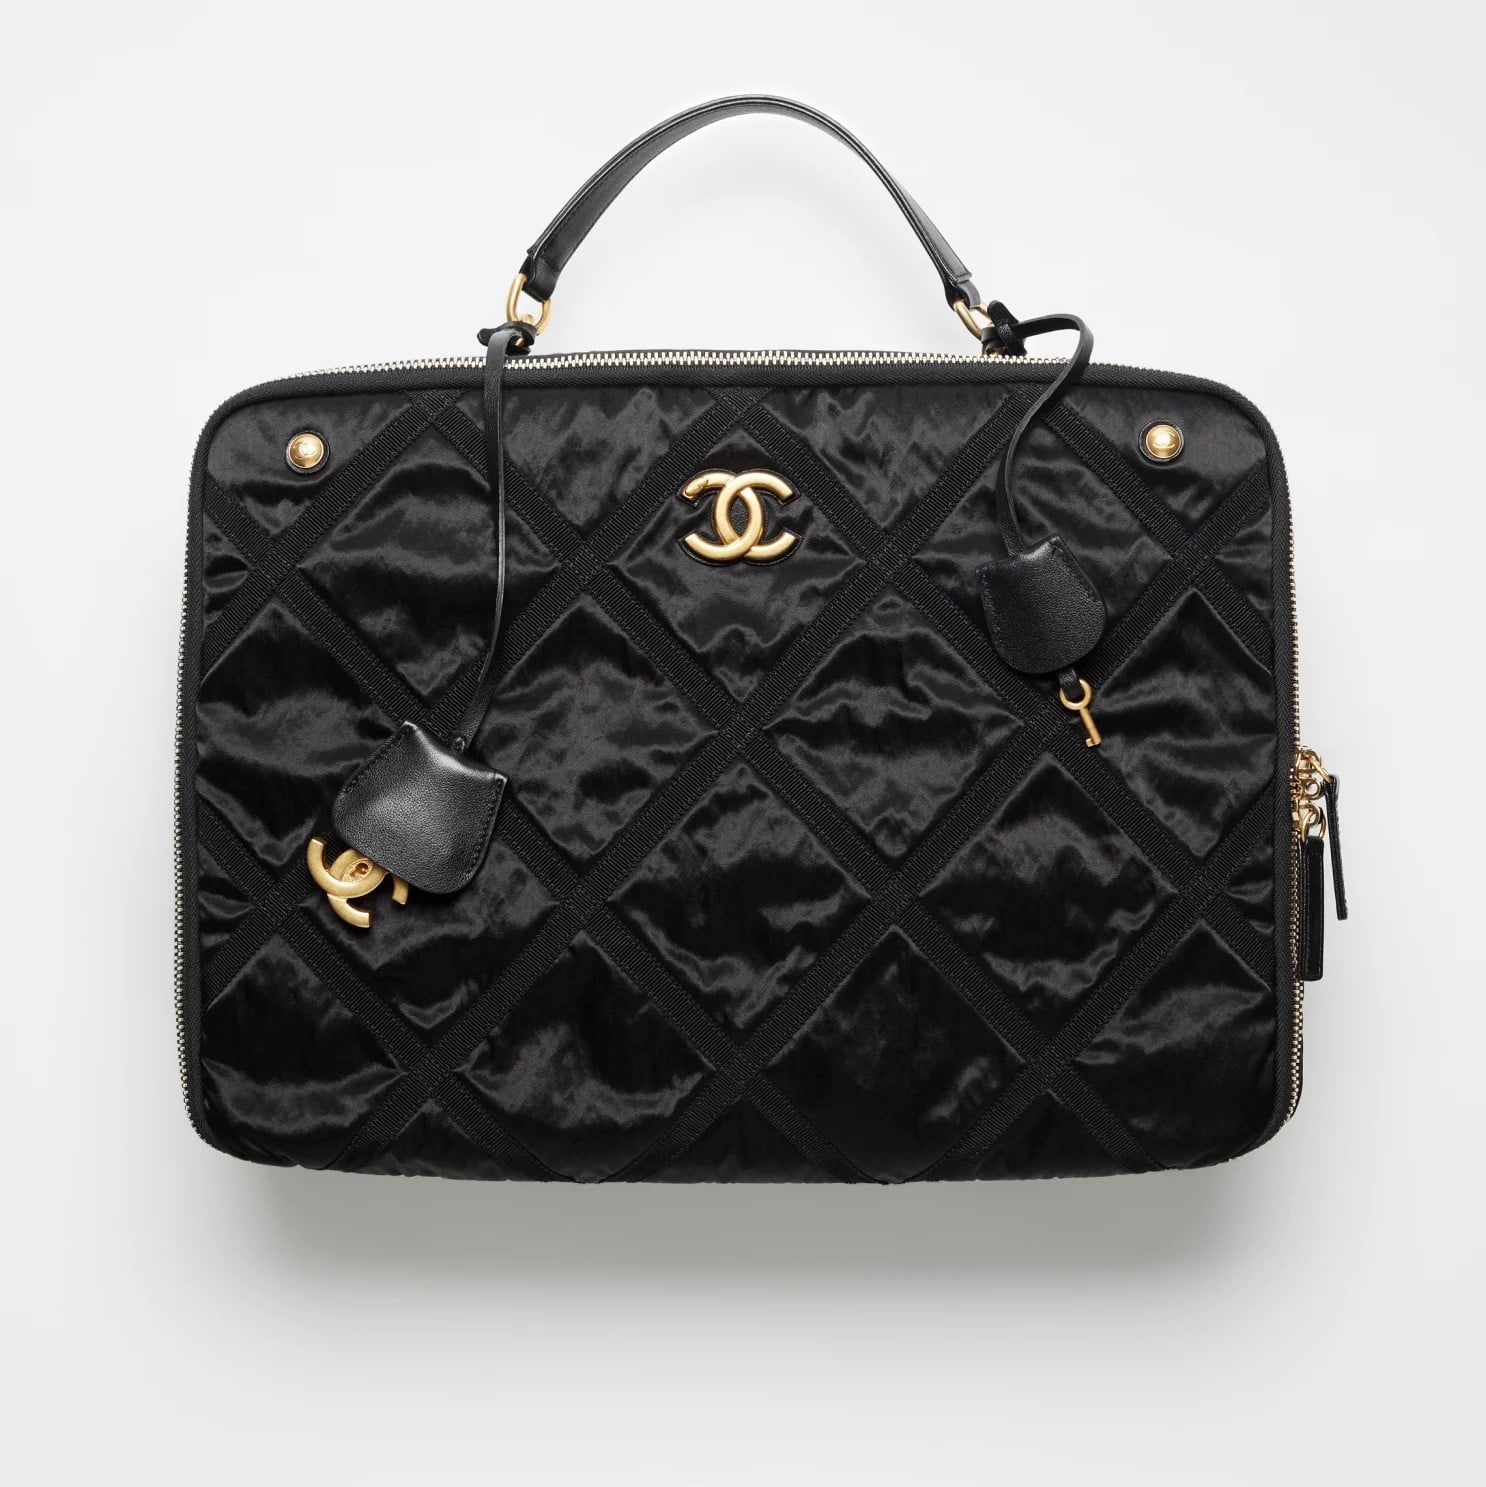 Chanel Black Nylon Travel Bag